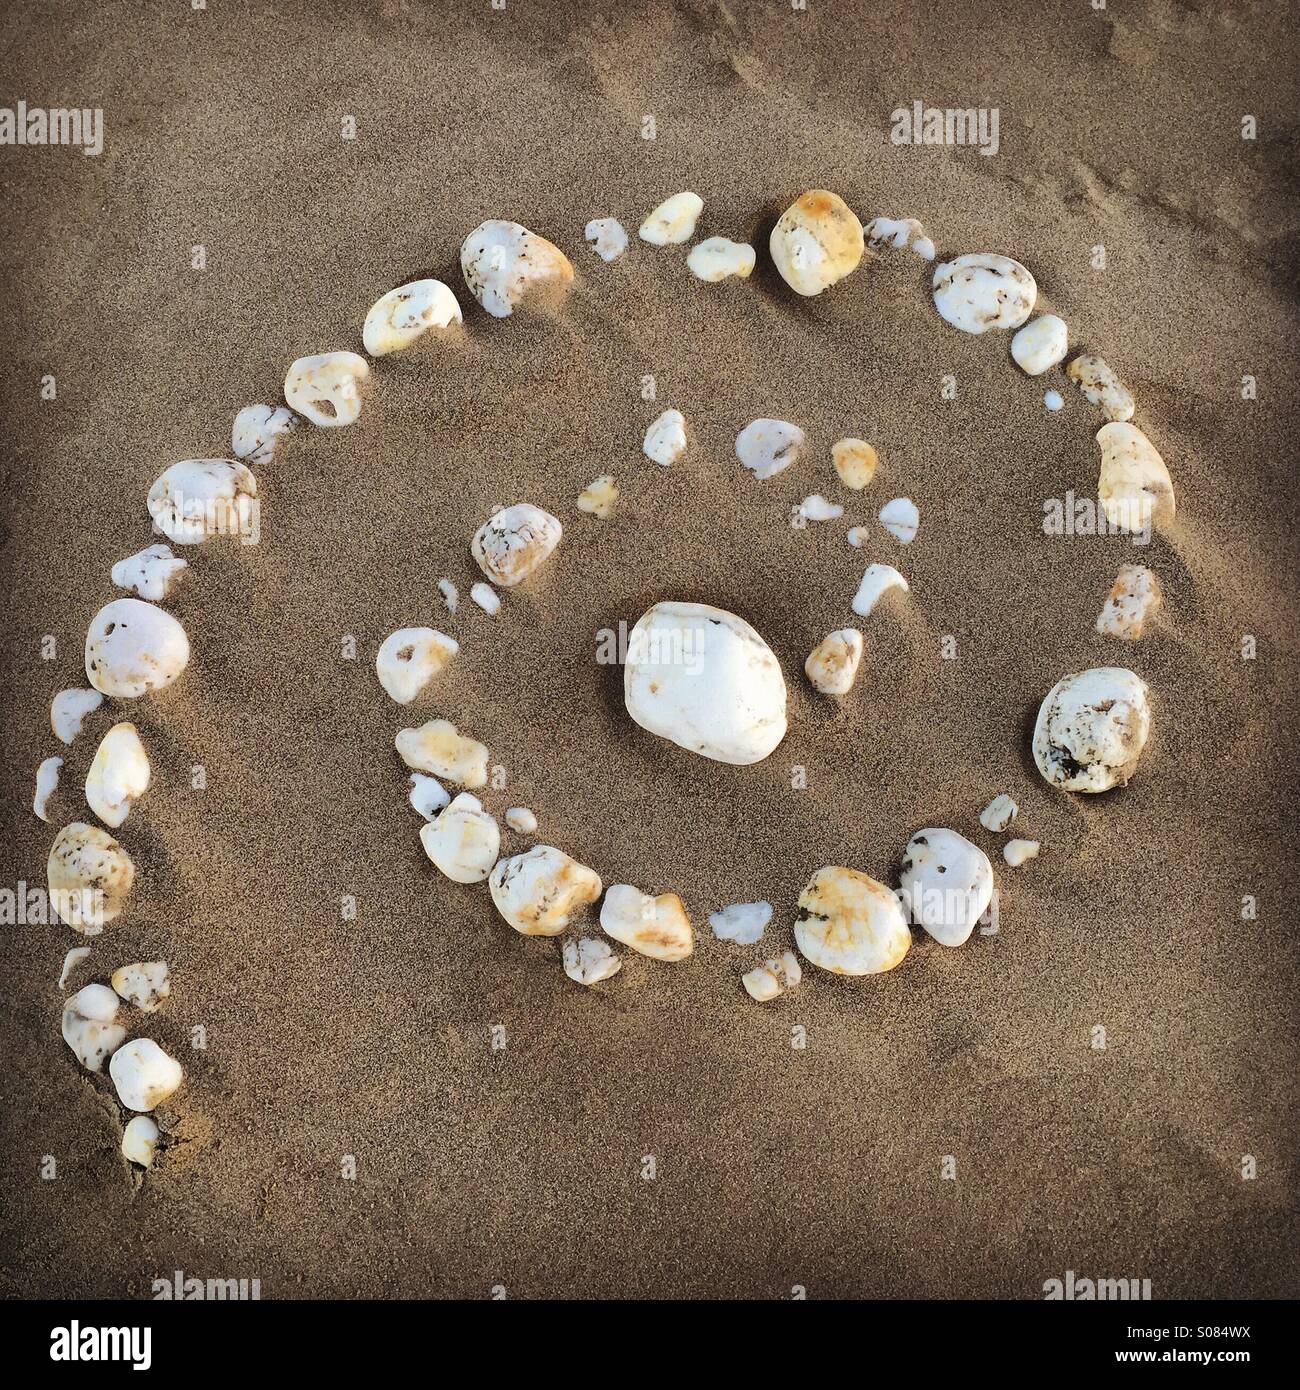 Beach art, spiral of pebbles on sandy beach Stock Photo